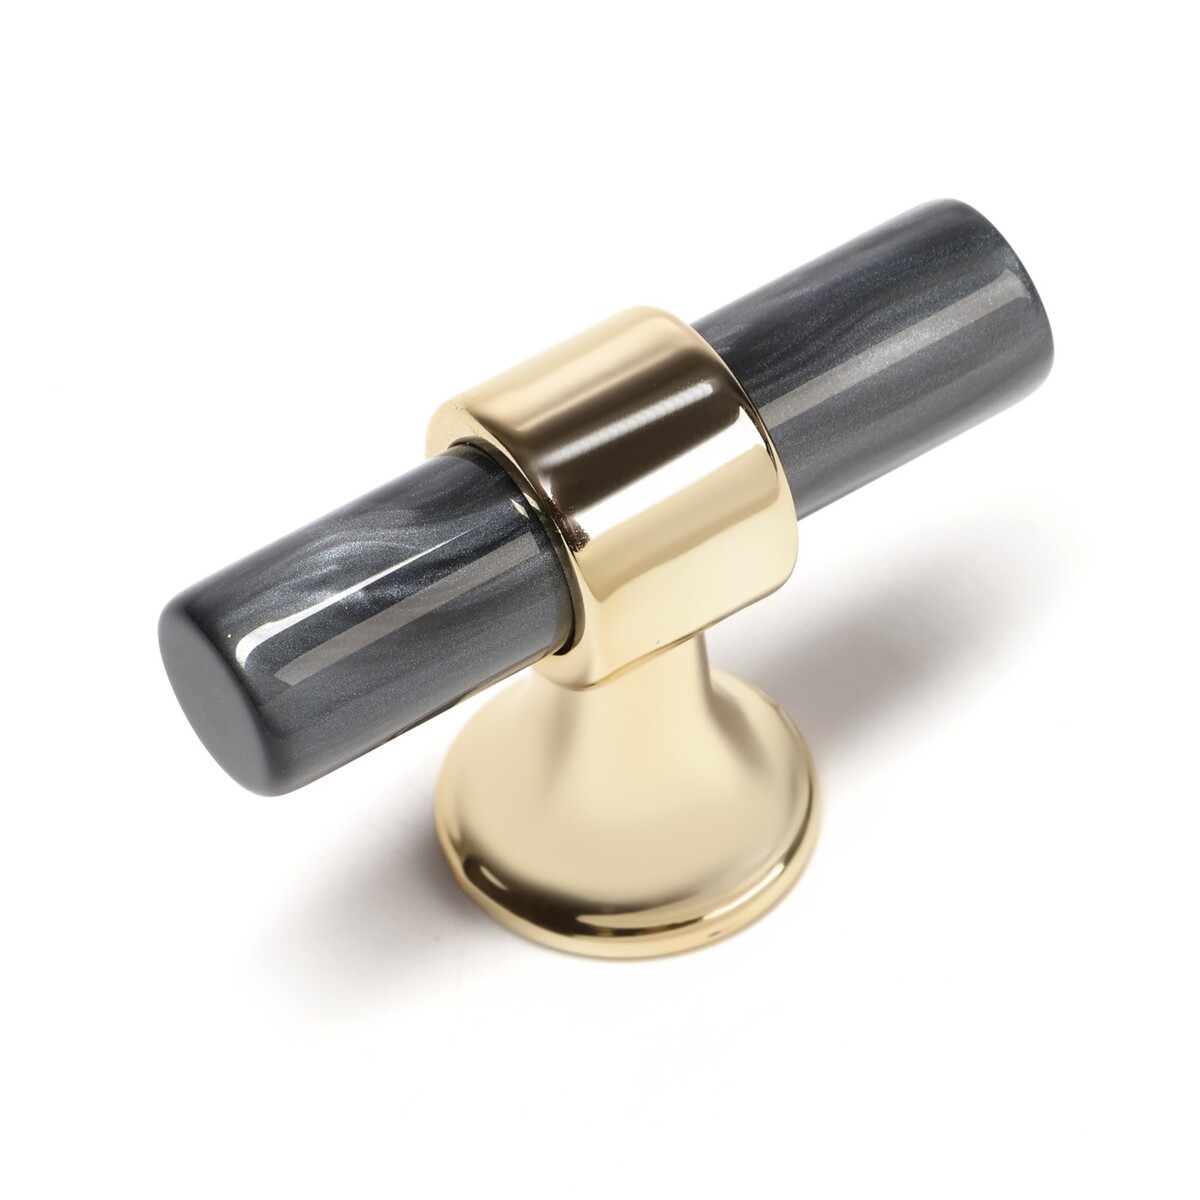 Ручка кнопка cappio pk106, d=12 мм, пластик, цвет графит/золото ручка cappio rt001 l 500 м о 288 графит